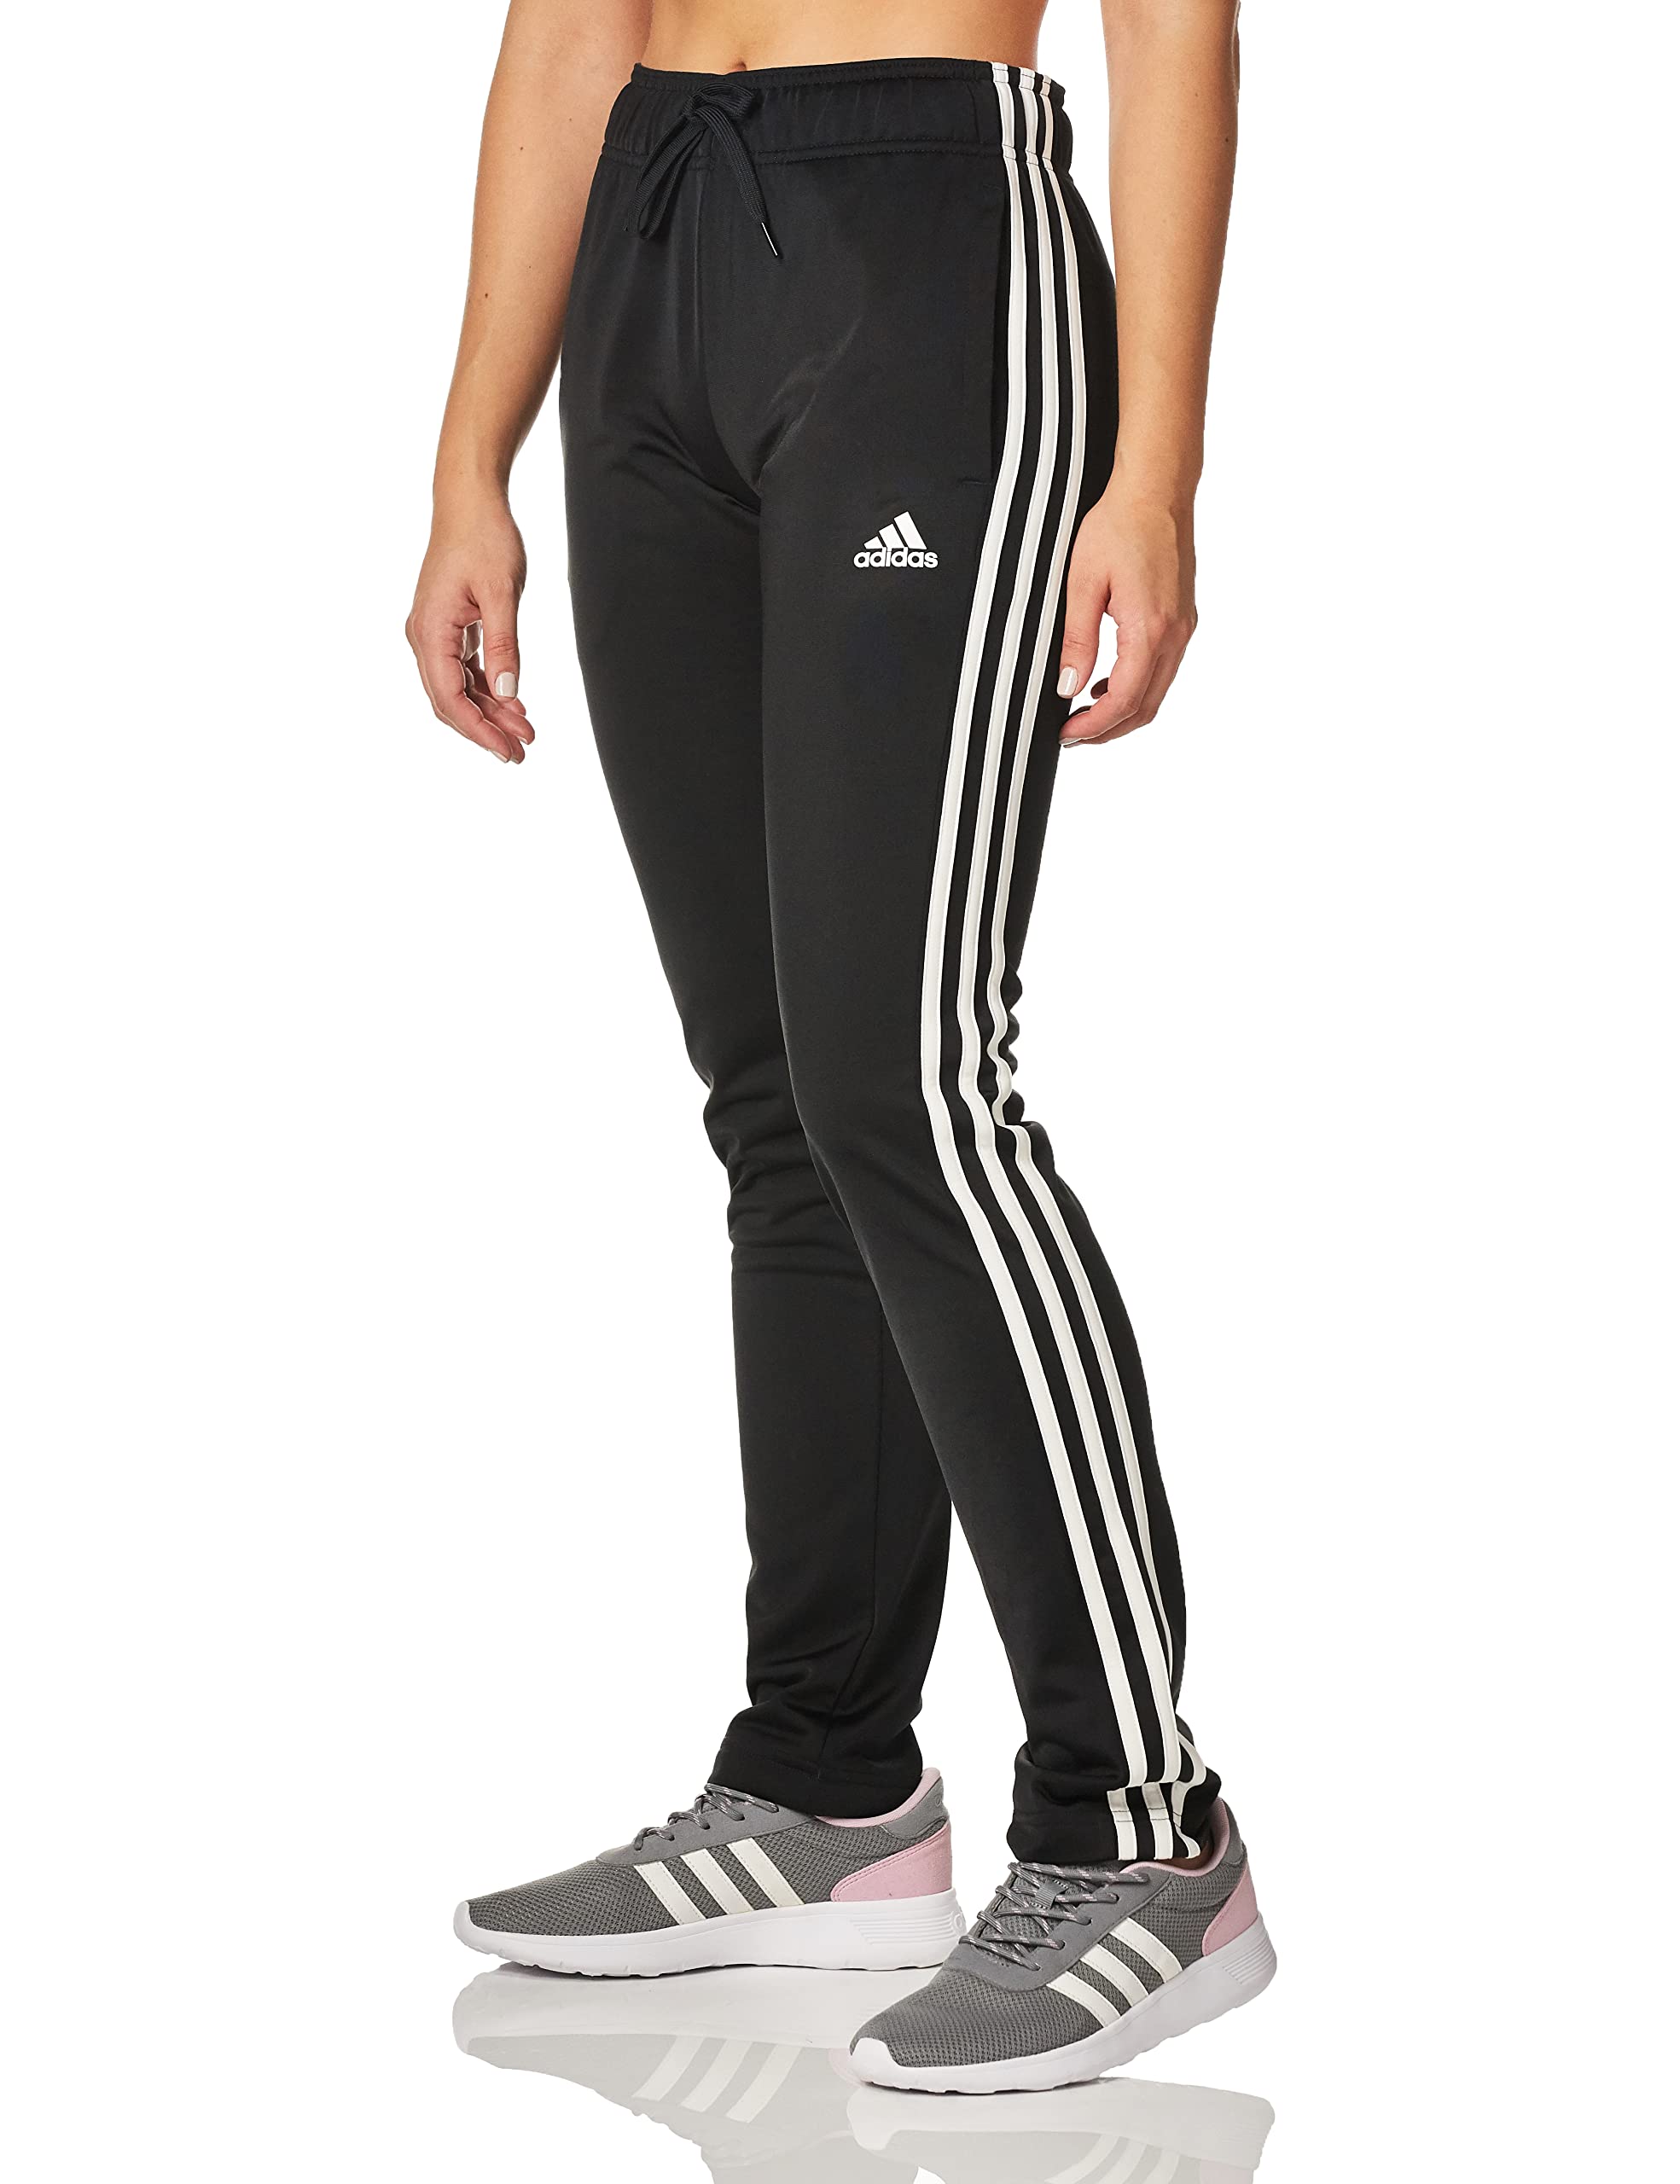 adidas Women's Warm-up Tricot Regular 3-Stripes Track Pants